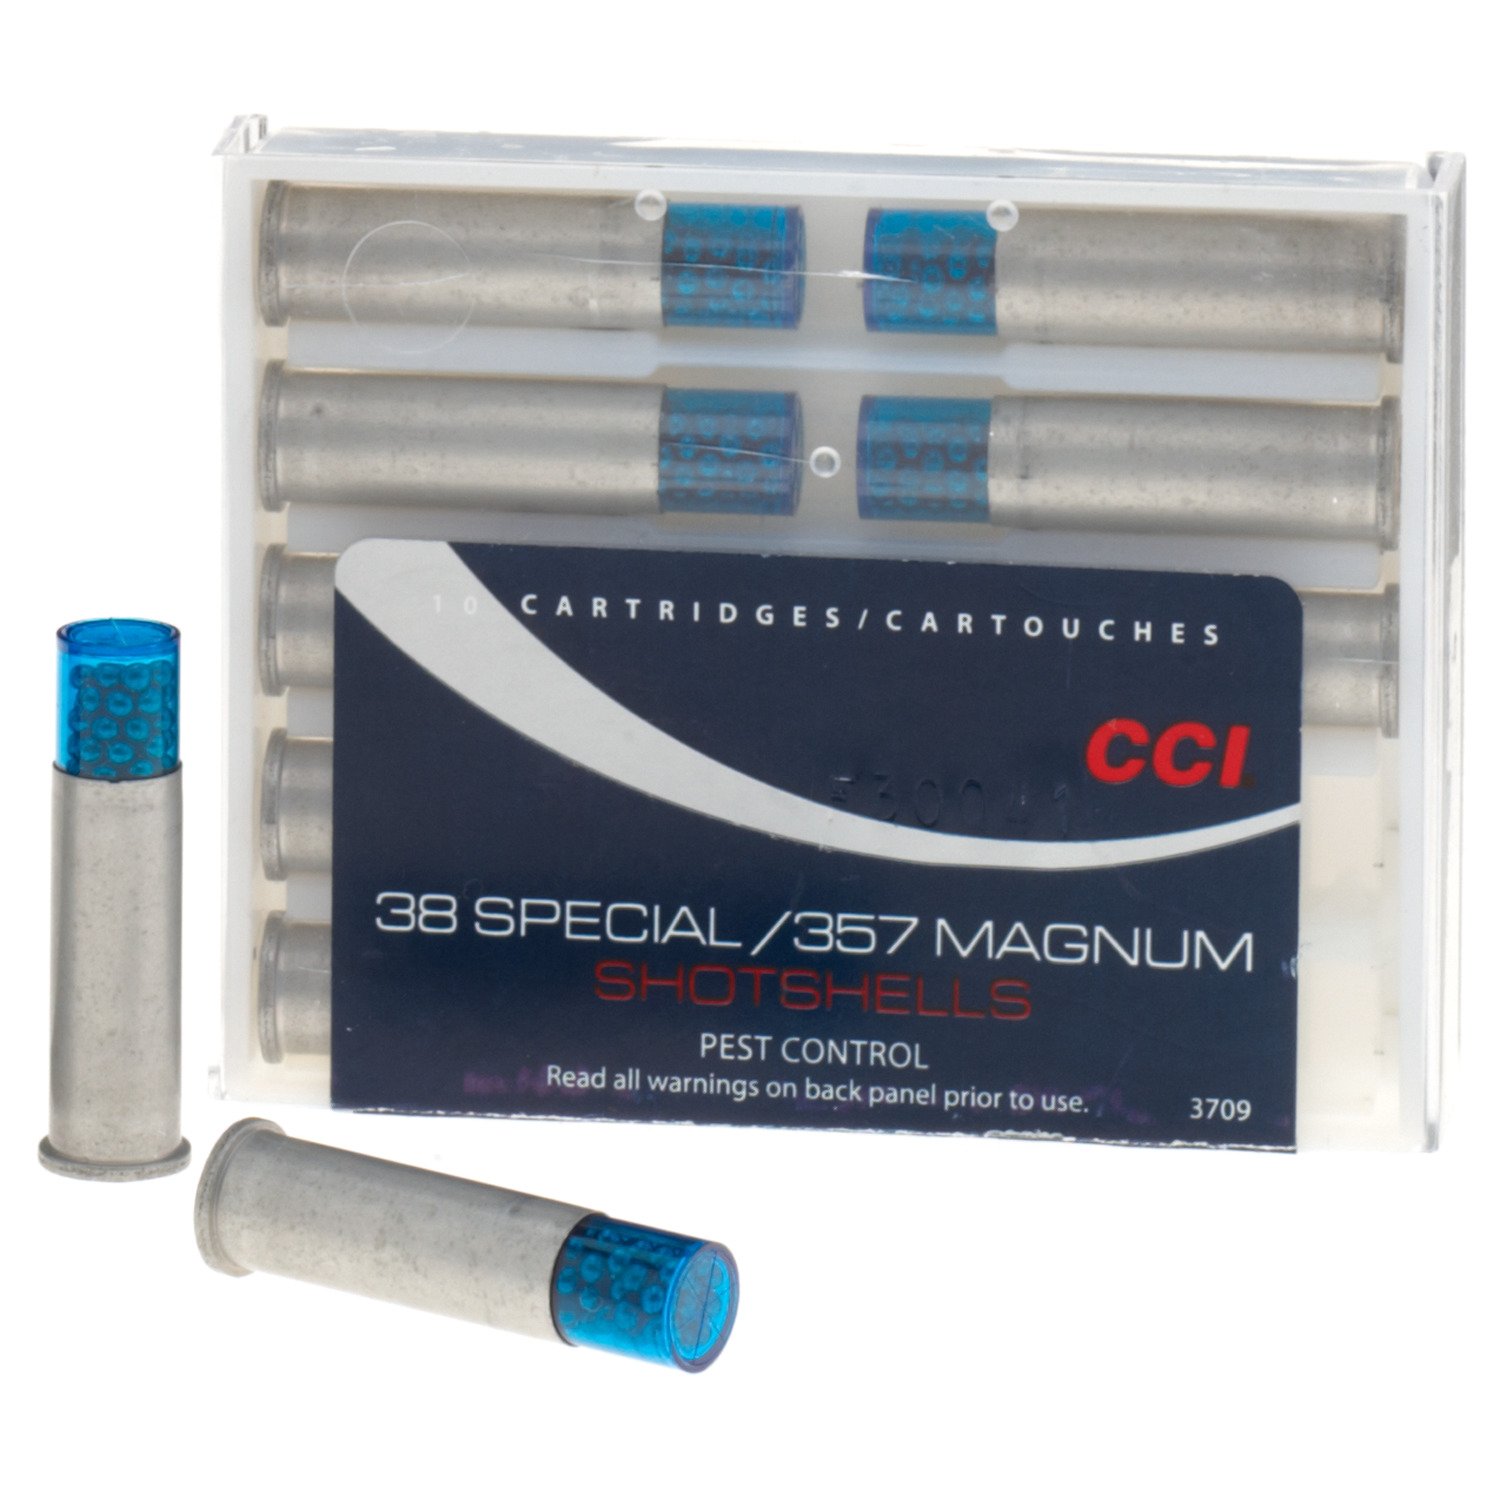 CCI Pest Control 38 Special357 Magnum 109-Grain Centerfire Handgun Shotshells - 10 Rounds                                     - view number 1